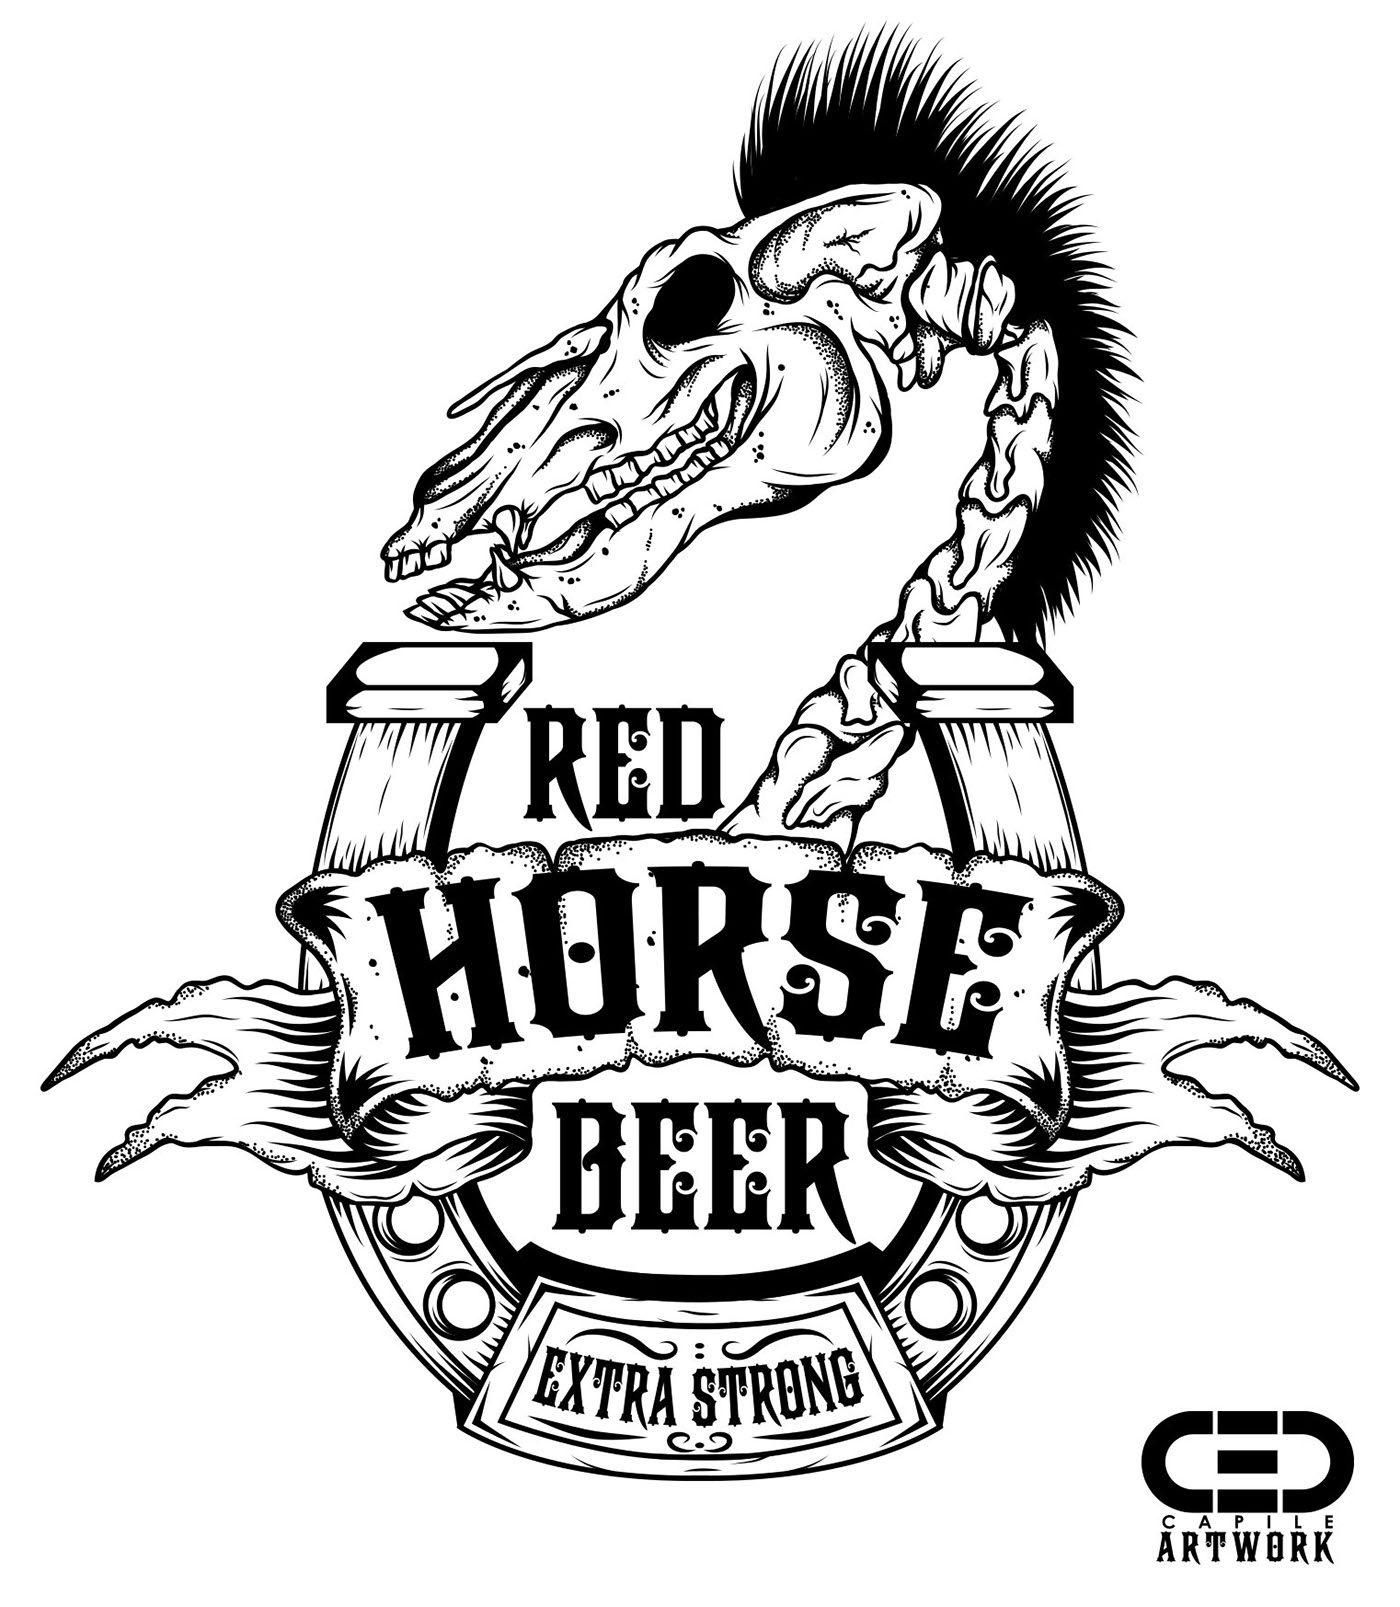 Red Horse Logo - Red Horse Beer FanArt on Behance